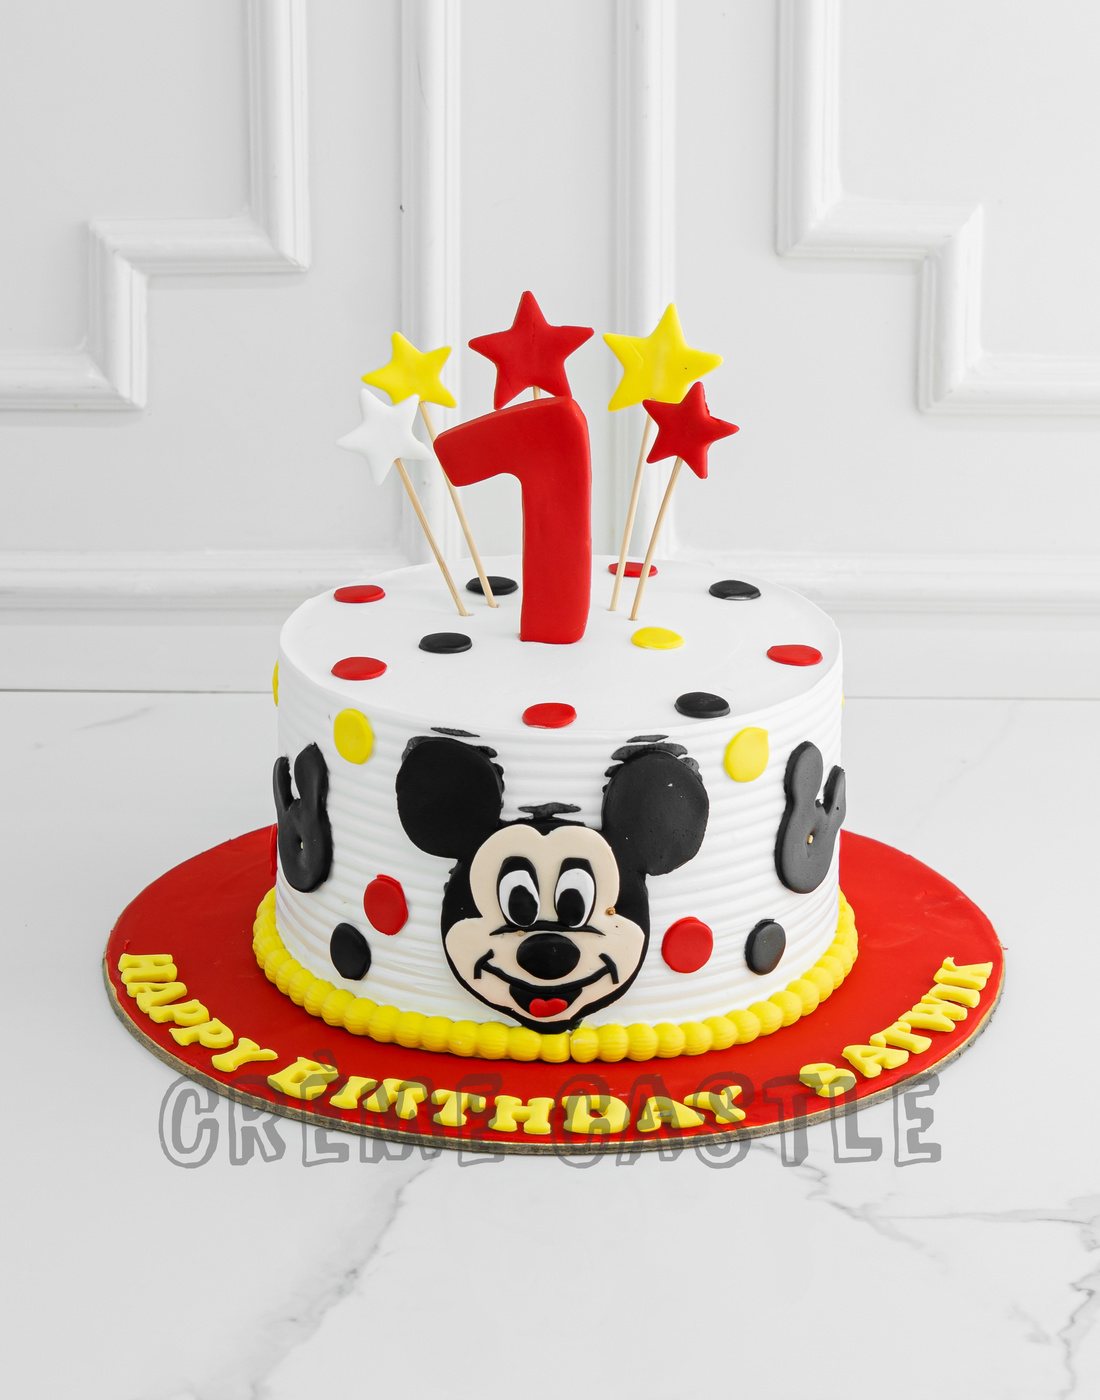 Watch Me Make A Minnie Mouse Cake! - YouTube